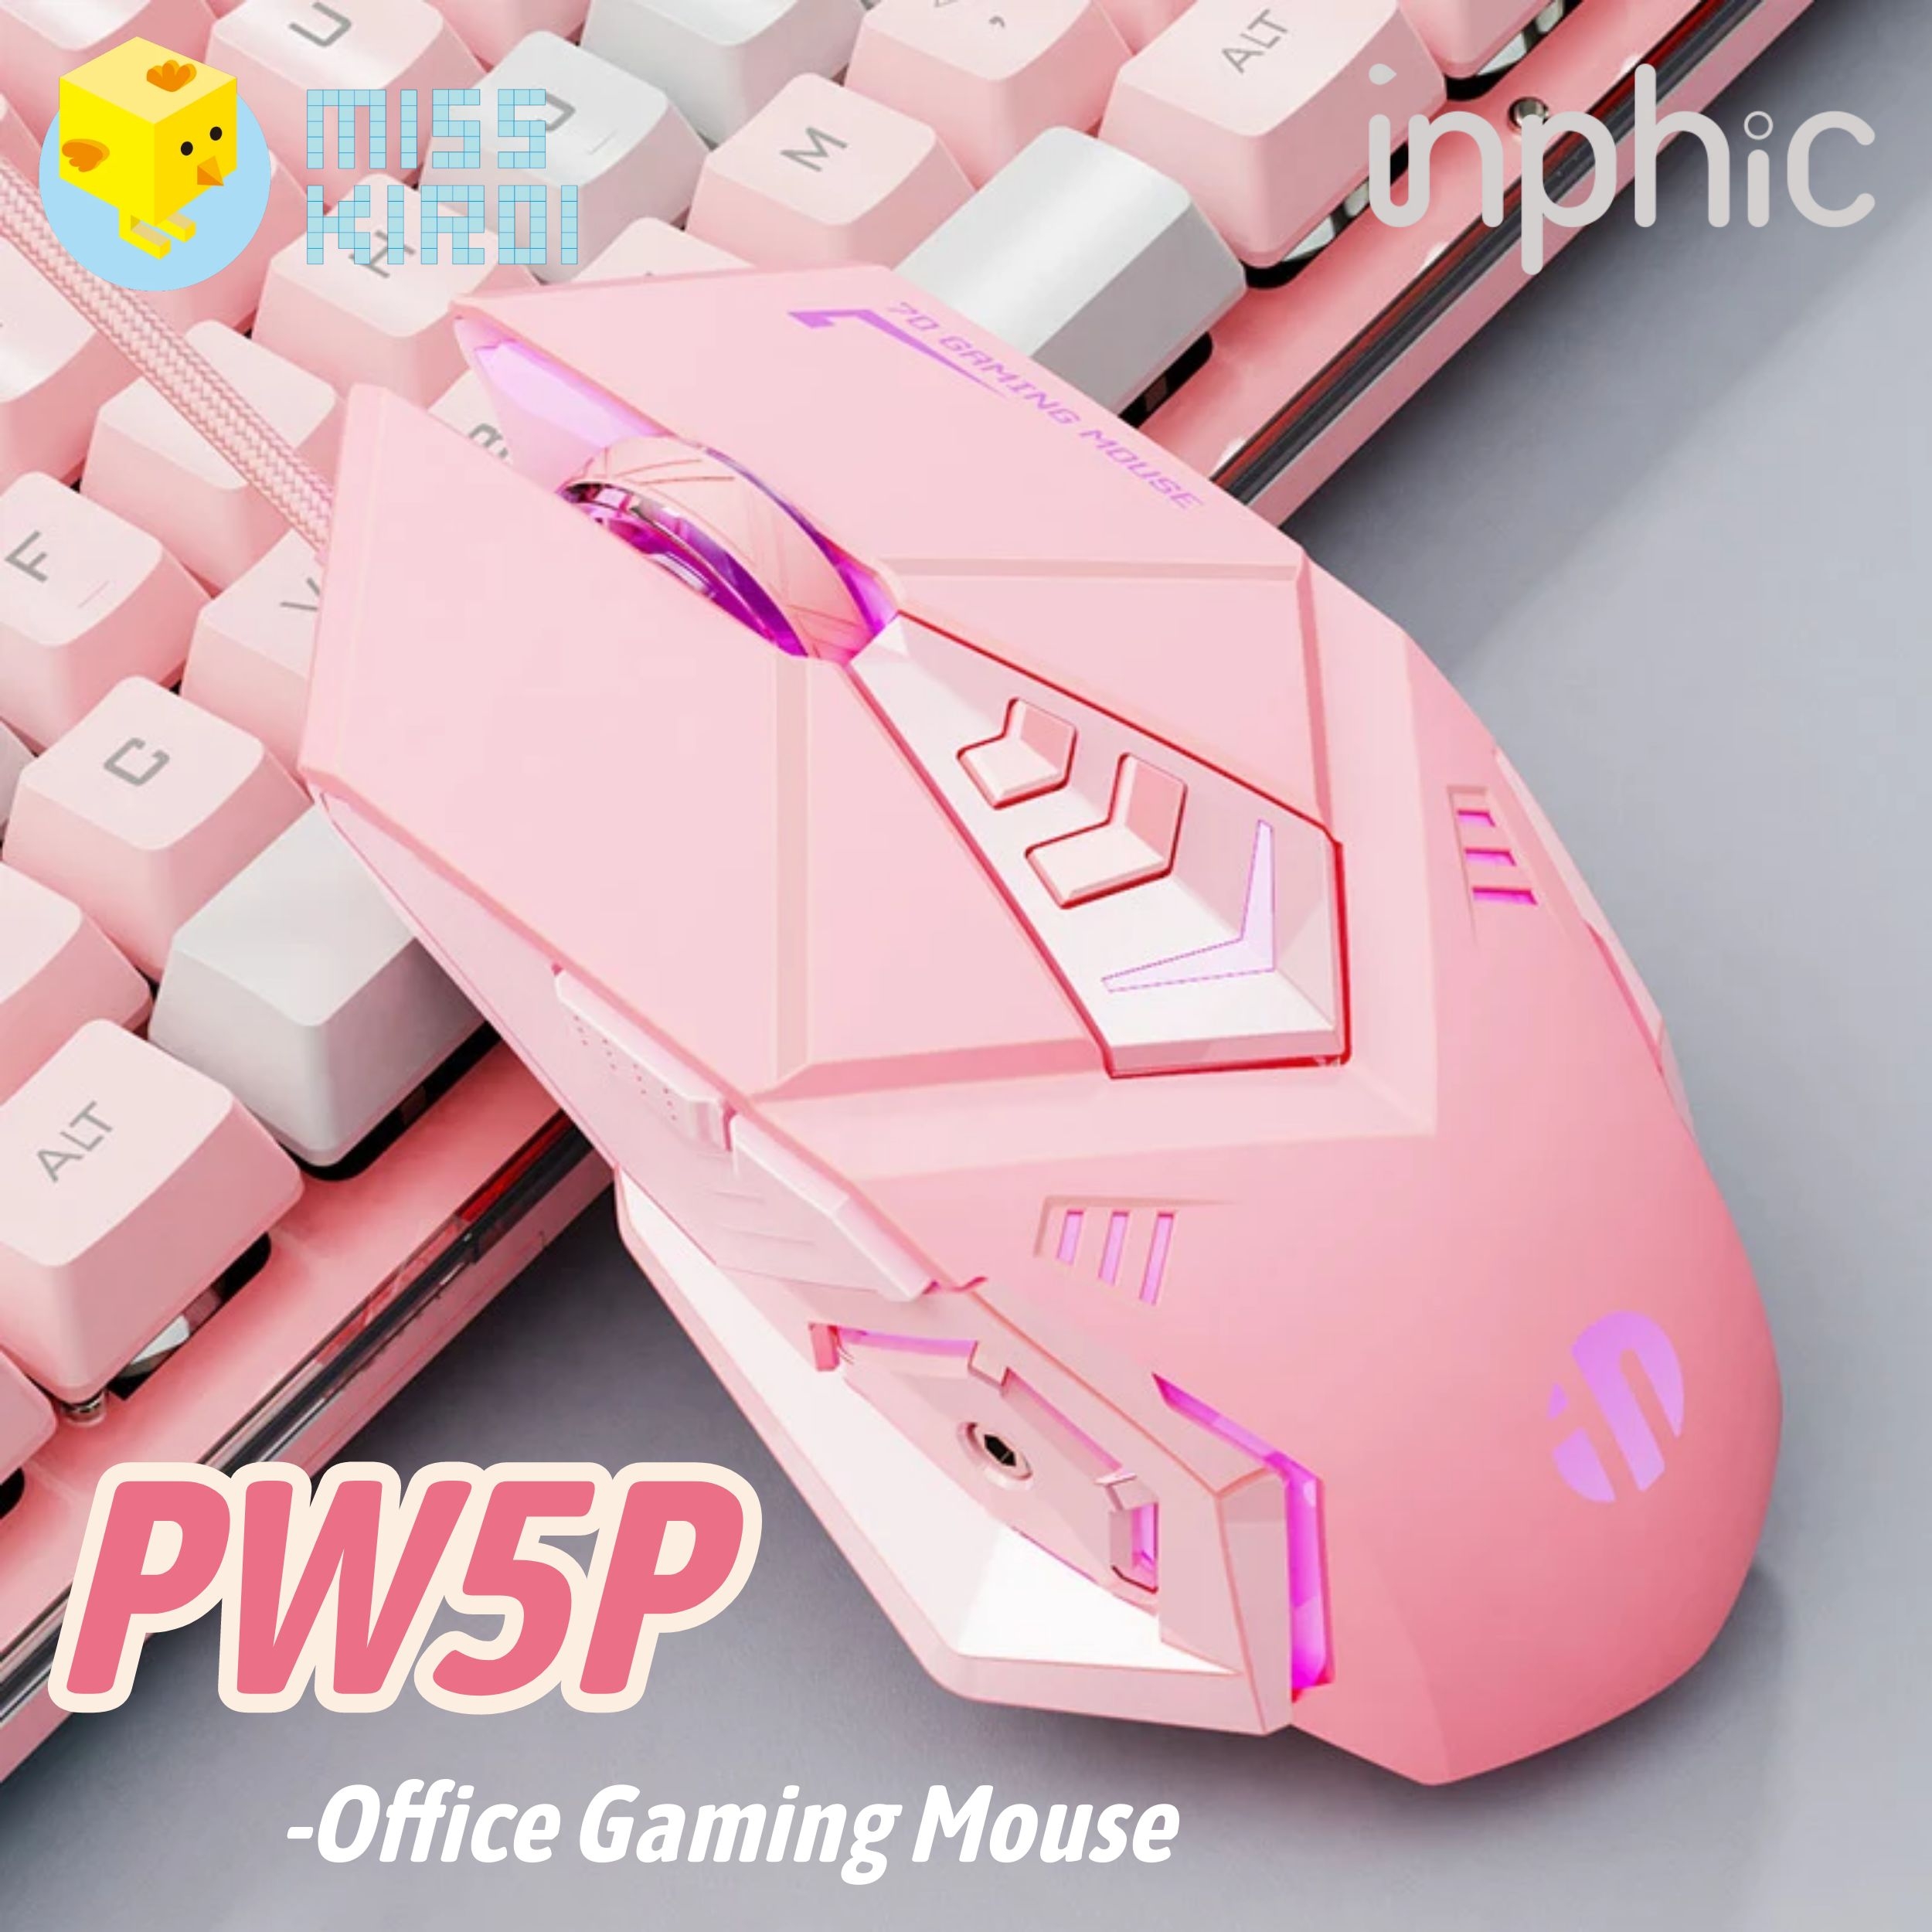 [PINK SERIES] Inphic PW5P Optical Macro Key Office Gaming Mouse เมาส์เกมมิ่ง ออฟติคอล ตั้งมาโครคีย์ได้ ความแม่นยำสูงปรับ DPI 1000-4800 เหมาะกับเกม MMORPG (BNS) FPS MoBA เกมคอ